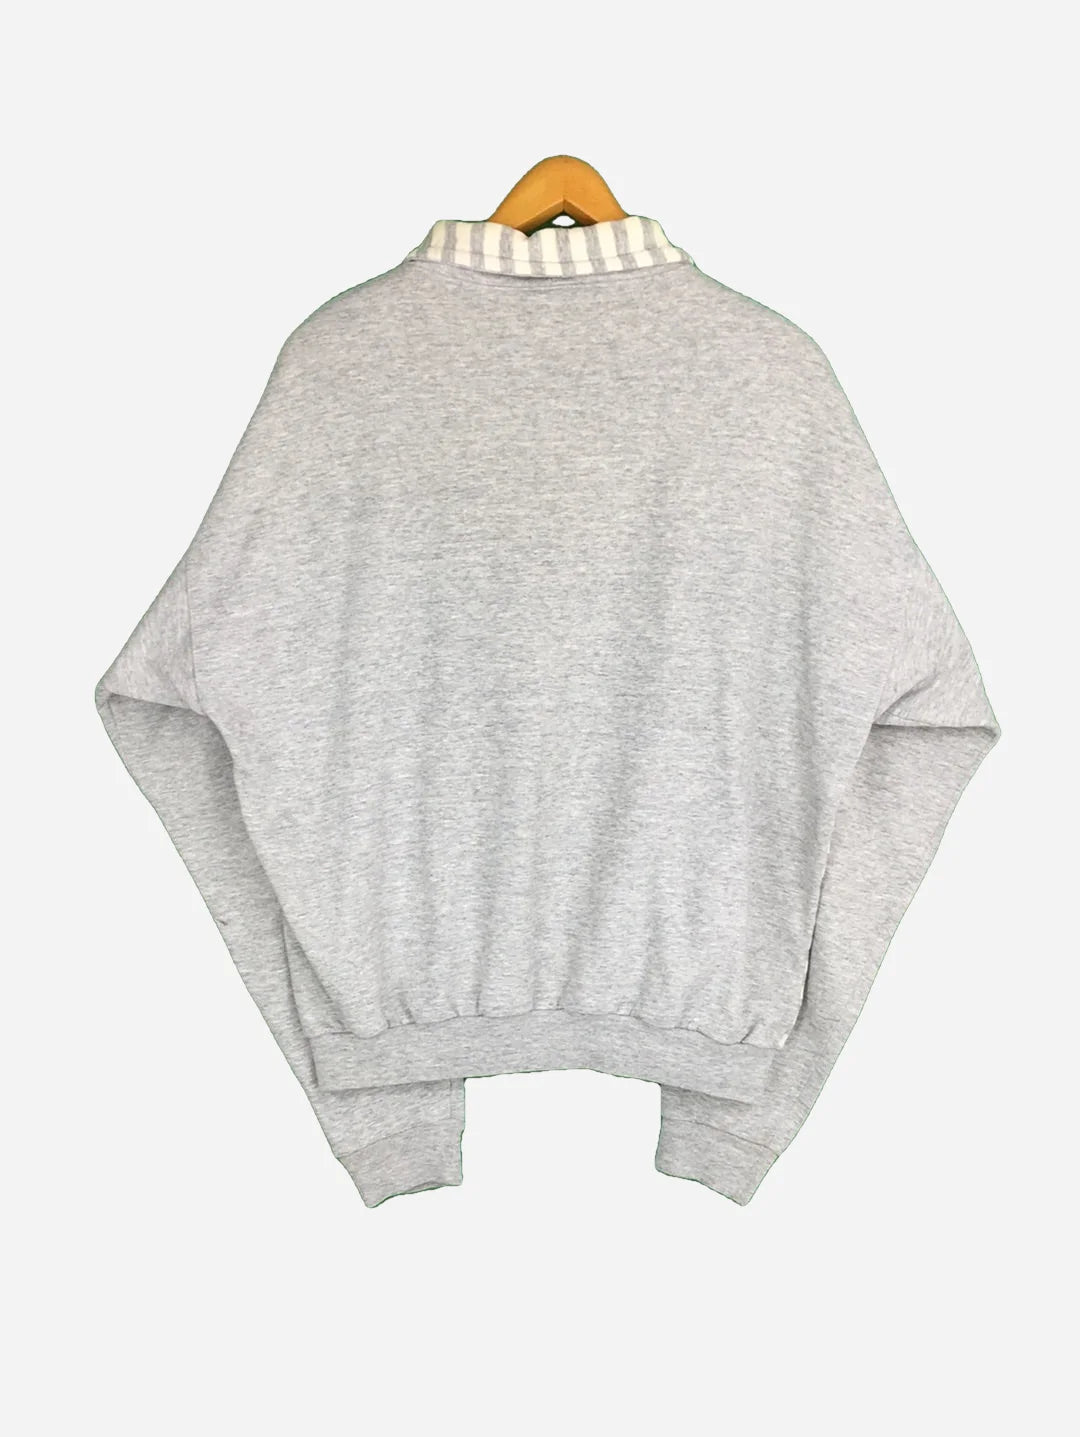 New Balance Sweater (S)